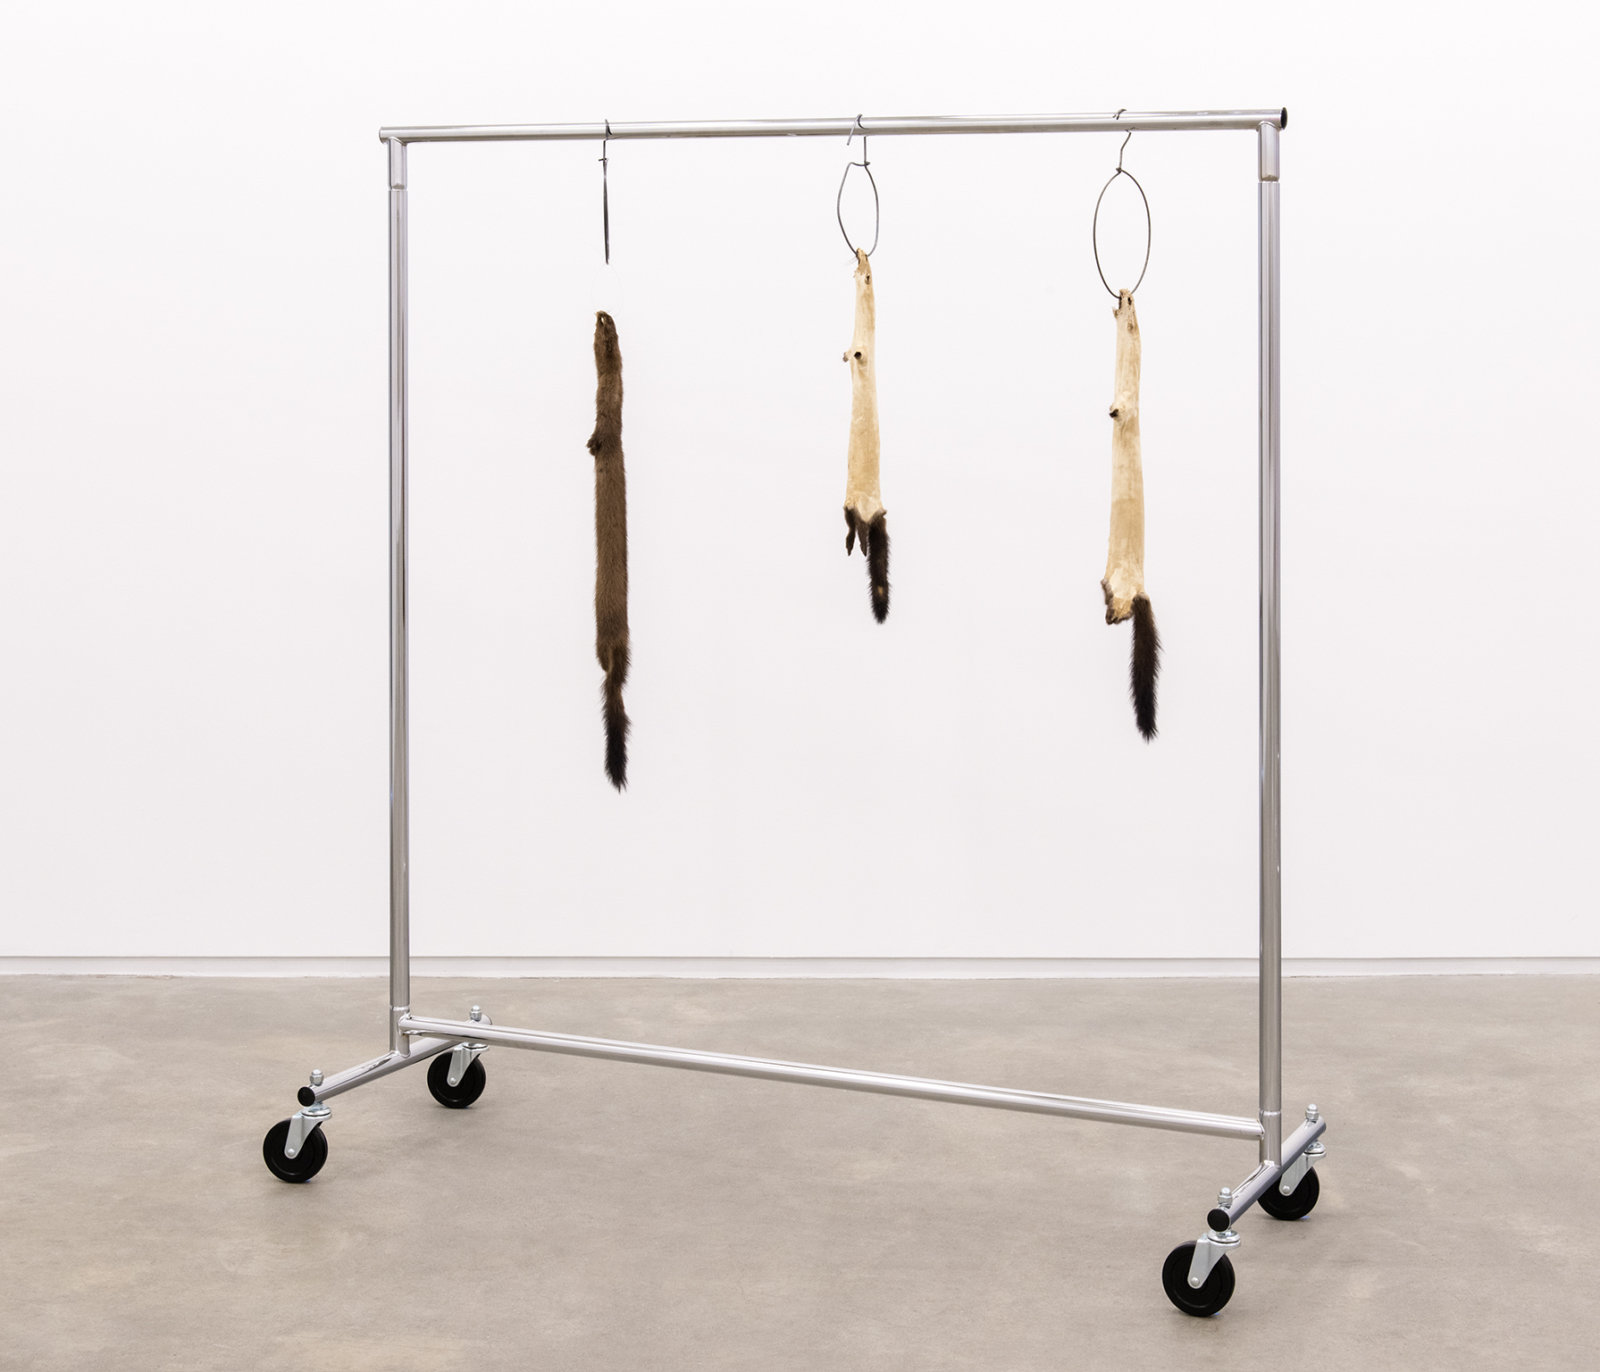 Duane Linklater, Little ghosts, 2014, mink furs, garment rack, plastic cable tie, hangers, 66 x 60 x 20 in. (168 x 151 x 52 cm)